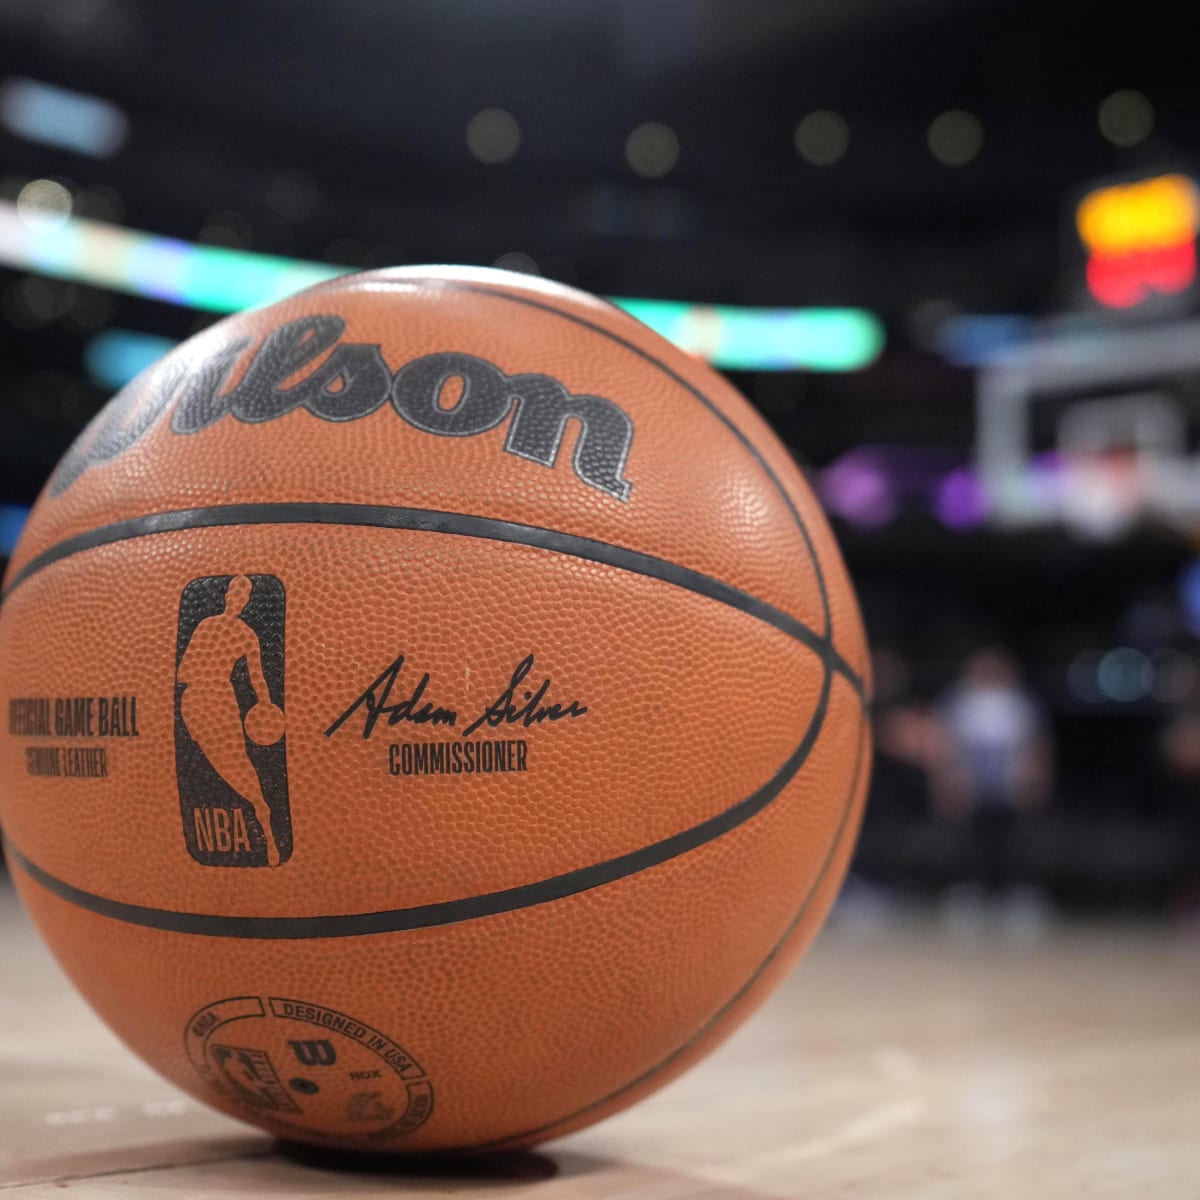 Warner's Zaslav: We don't need the NBA - Sports Media Watch